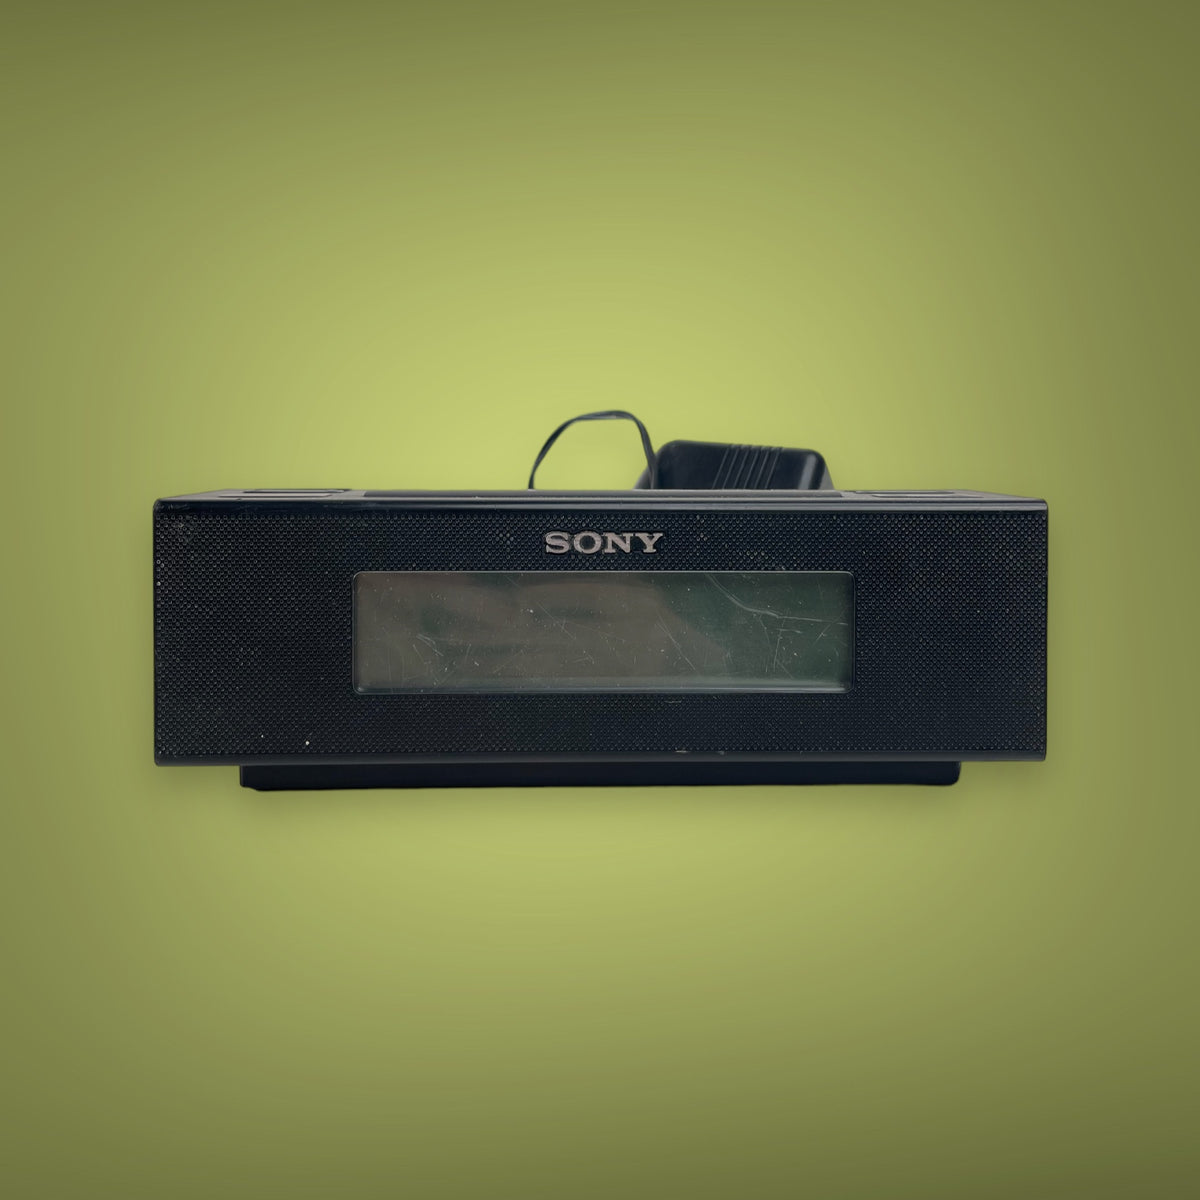 Sony ICF-C707 Radio-réveil Radio numérique AM/FM